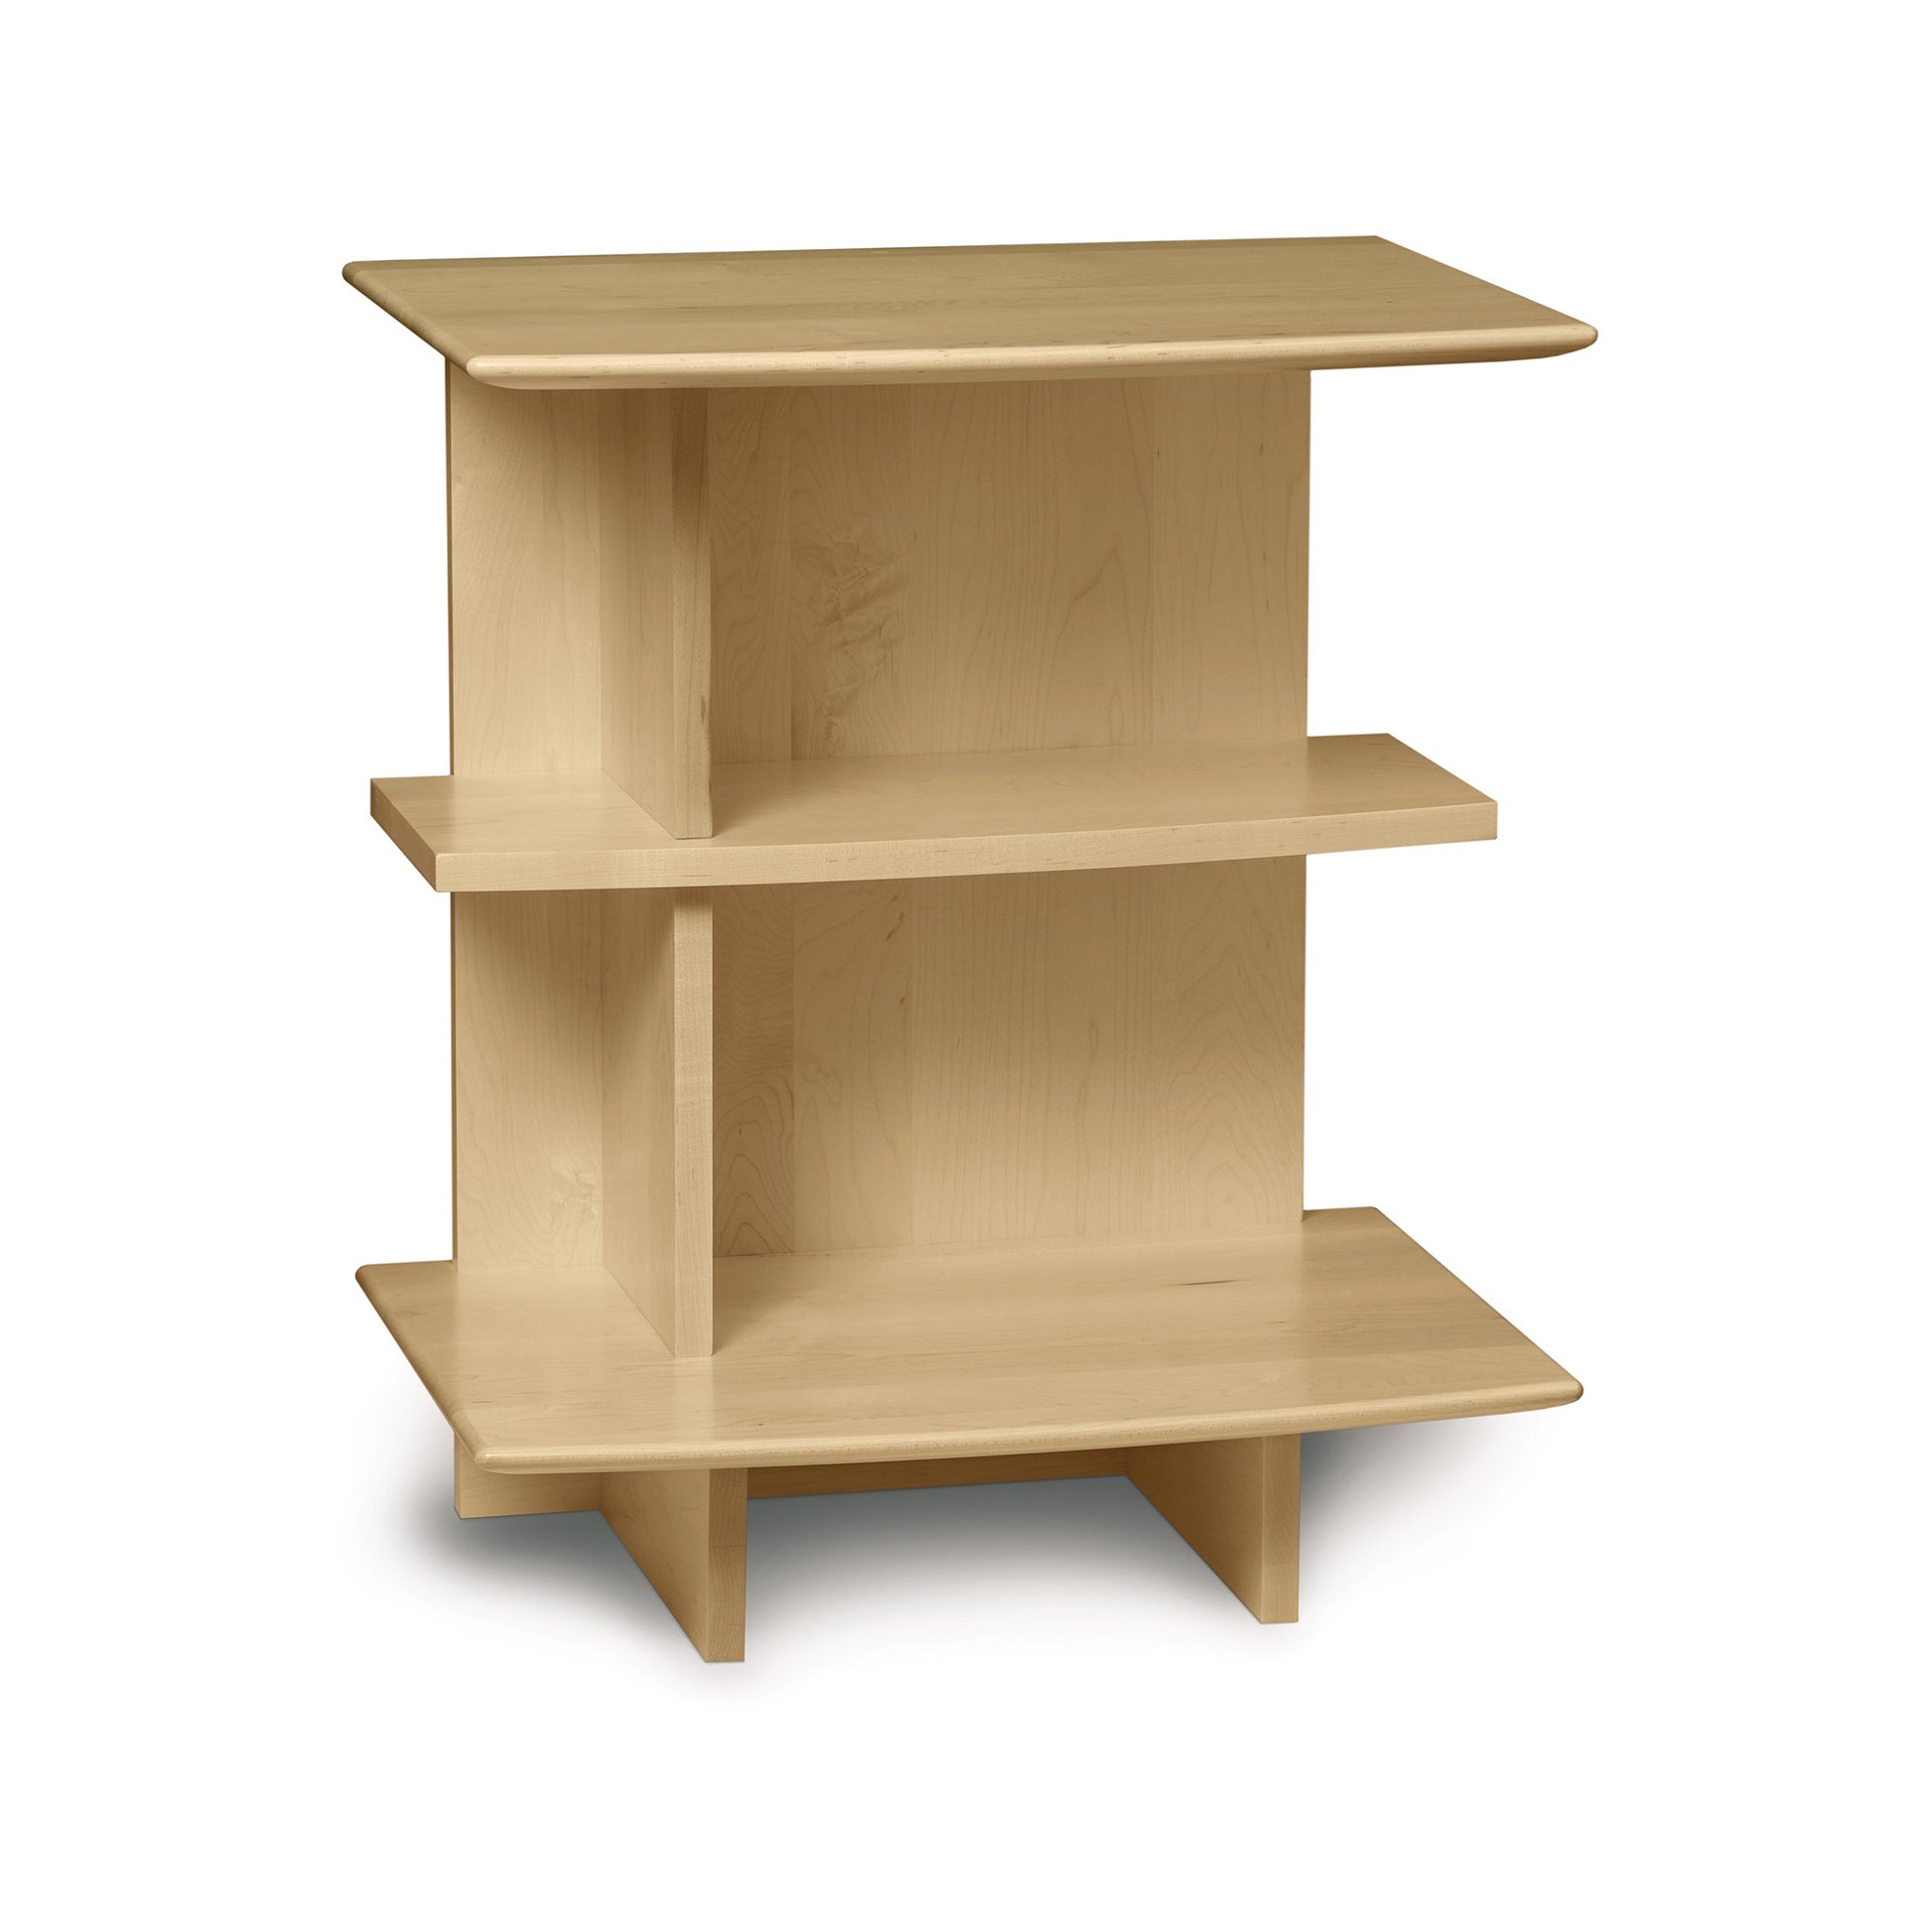 A simple, three-tiered, Copeland Furniture Sarah Open Shelf Nightstand corner shelf unit on a white background.